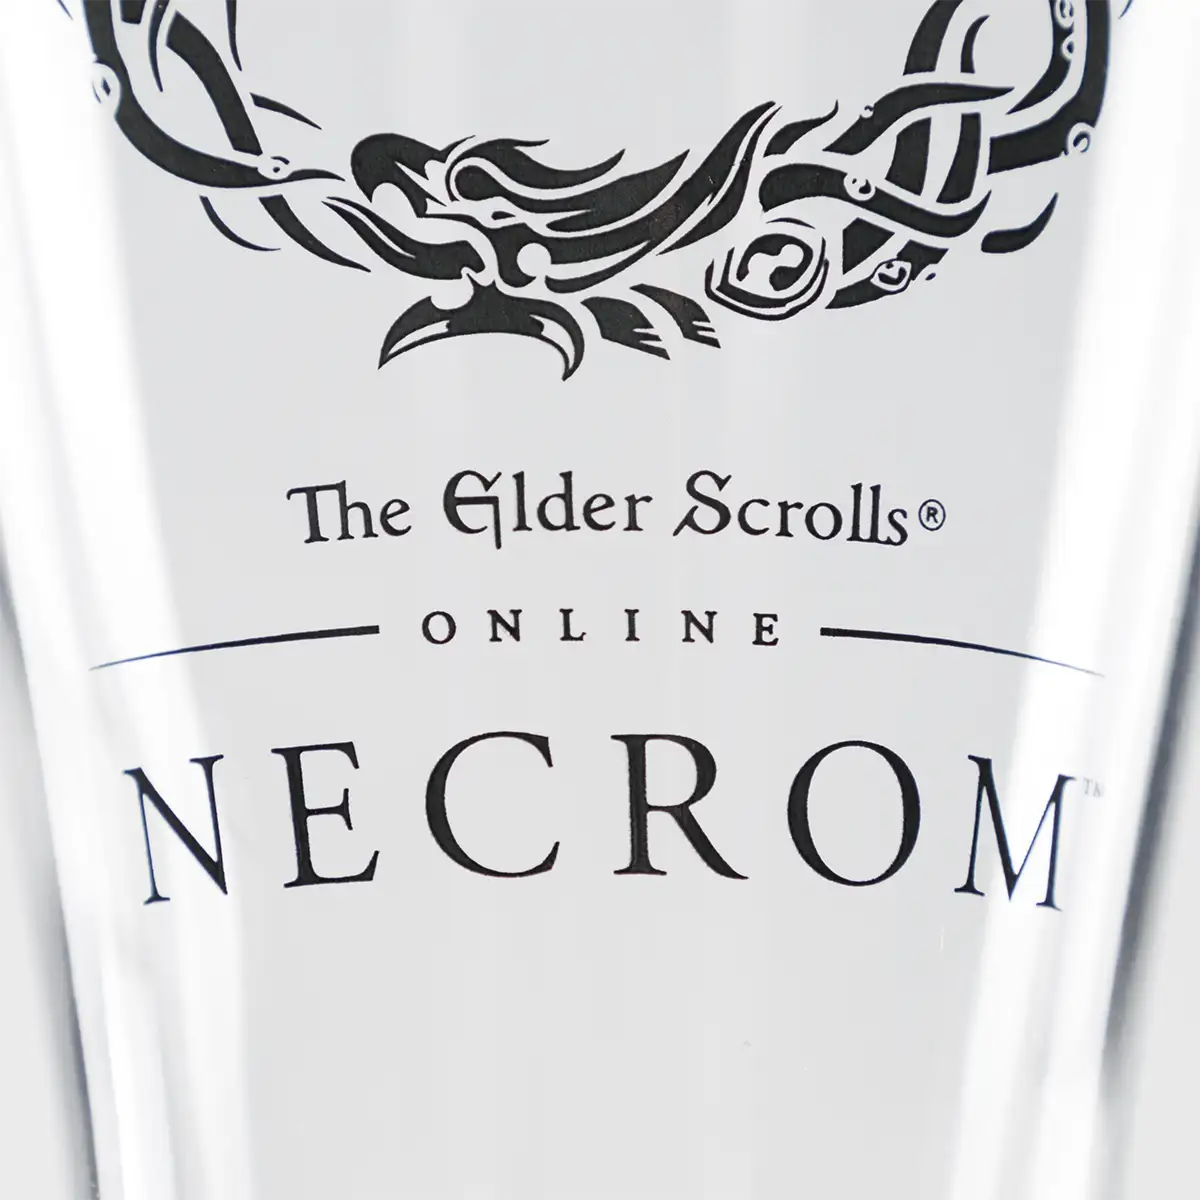 The Elder Scrolls Online Pint Glass "Necrom" Image 3